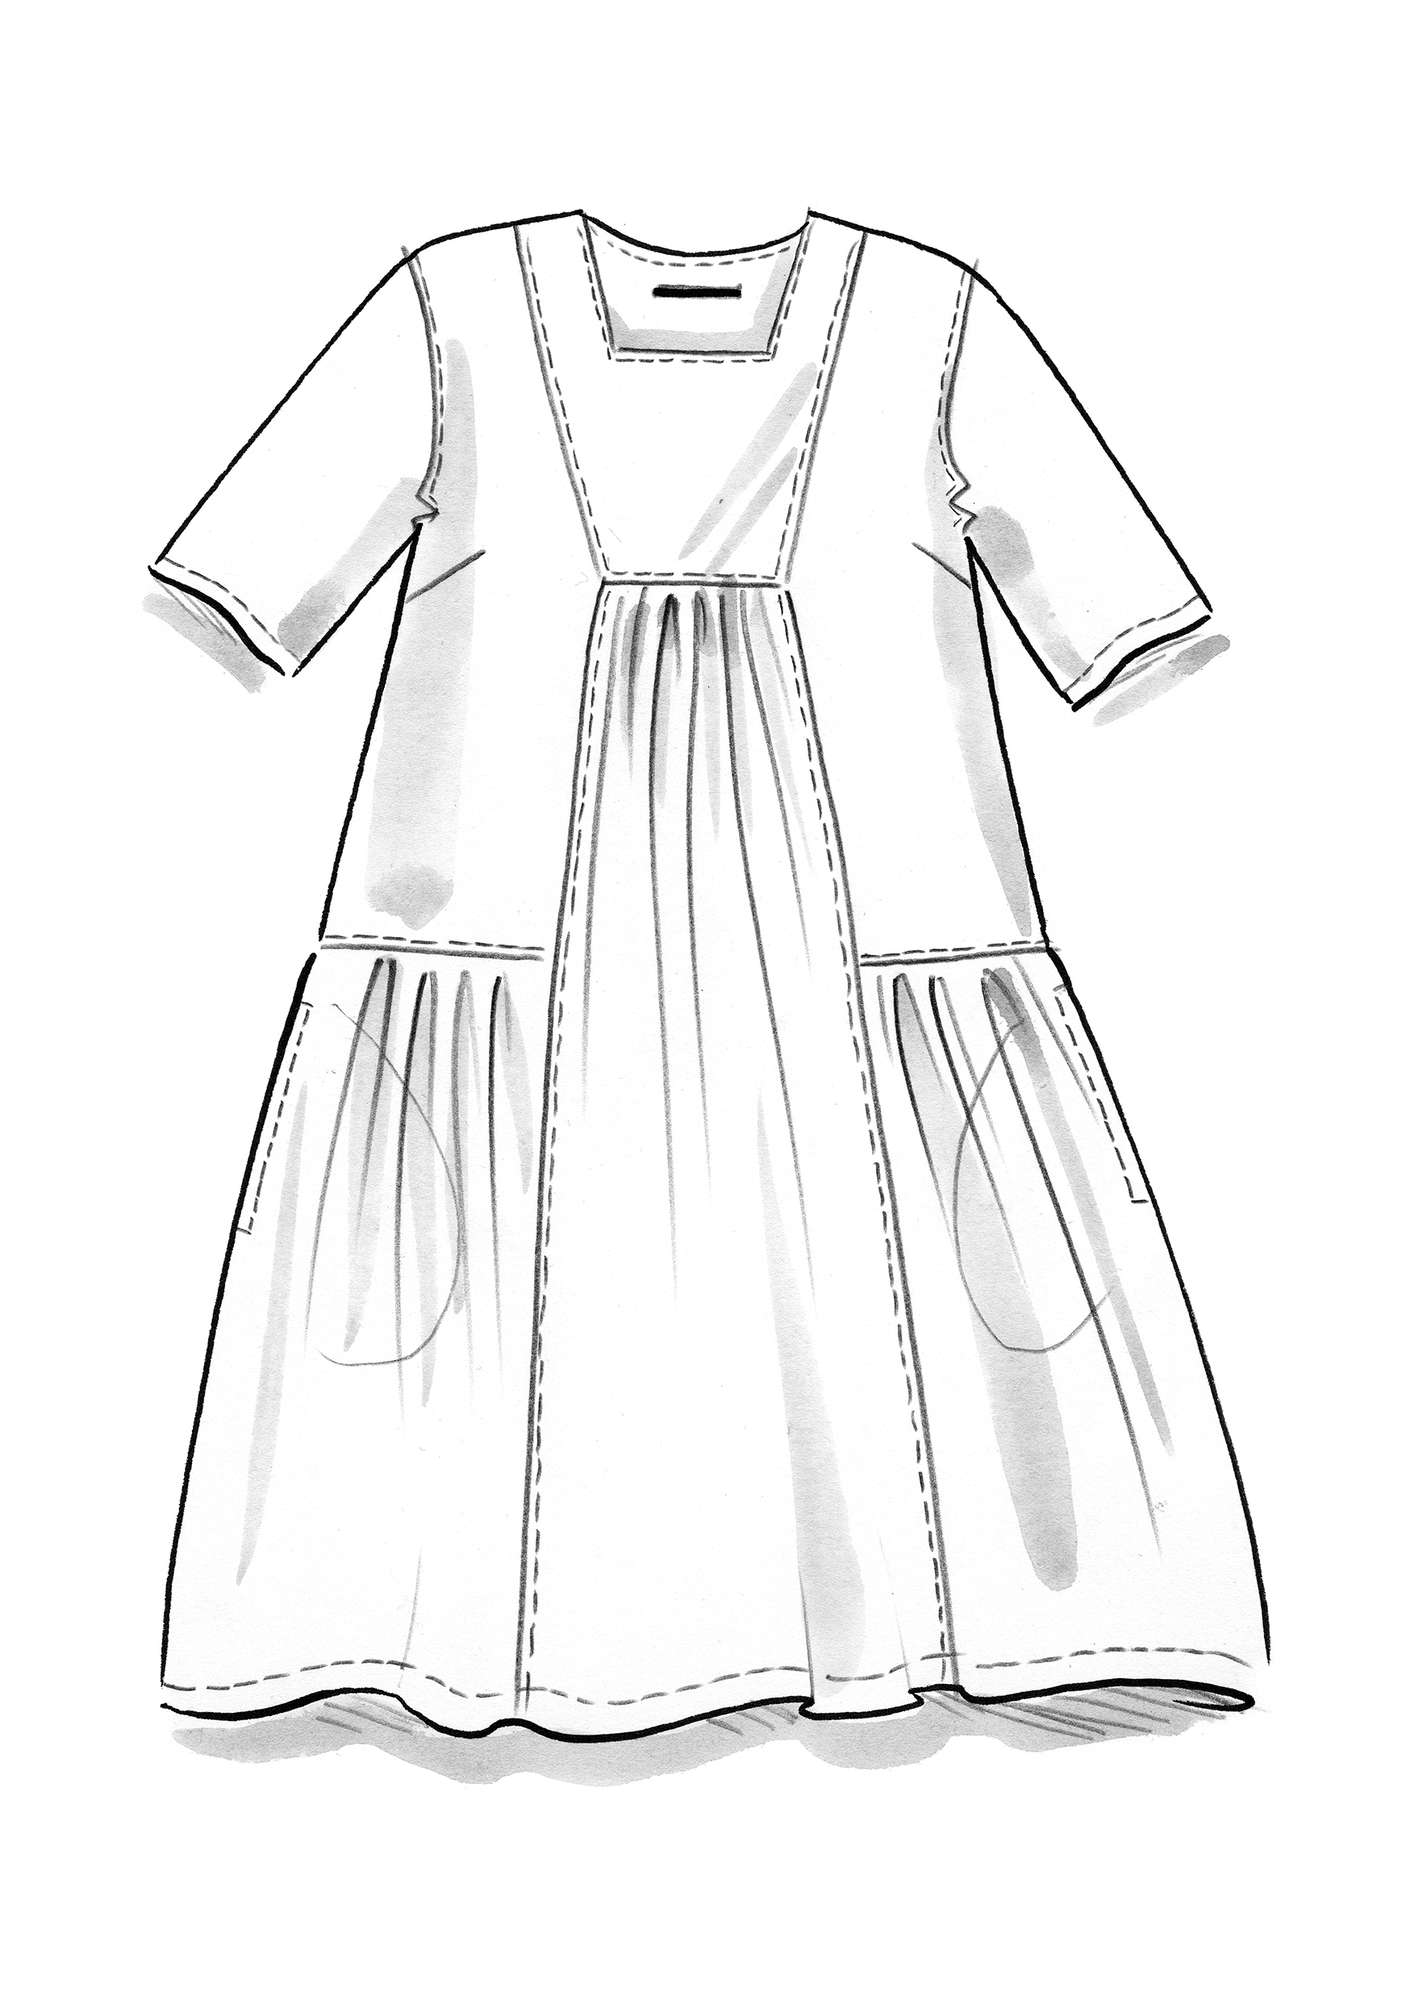 Geweven jurk  Acapella  van biologisch katoen multicolour/dessin